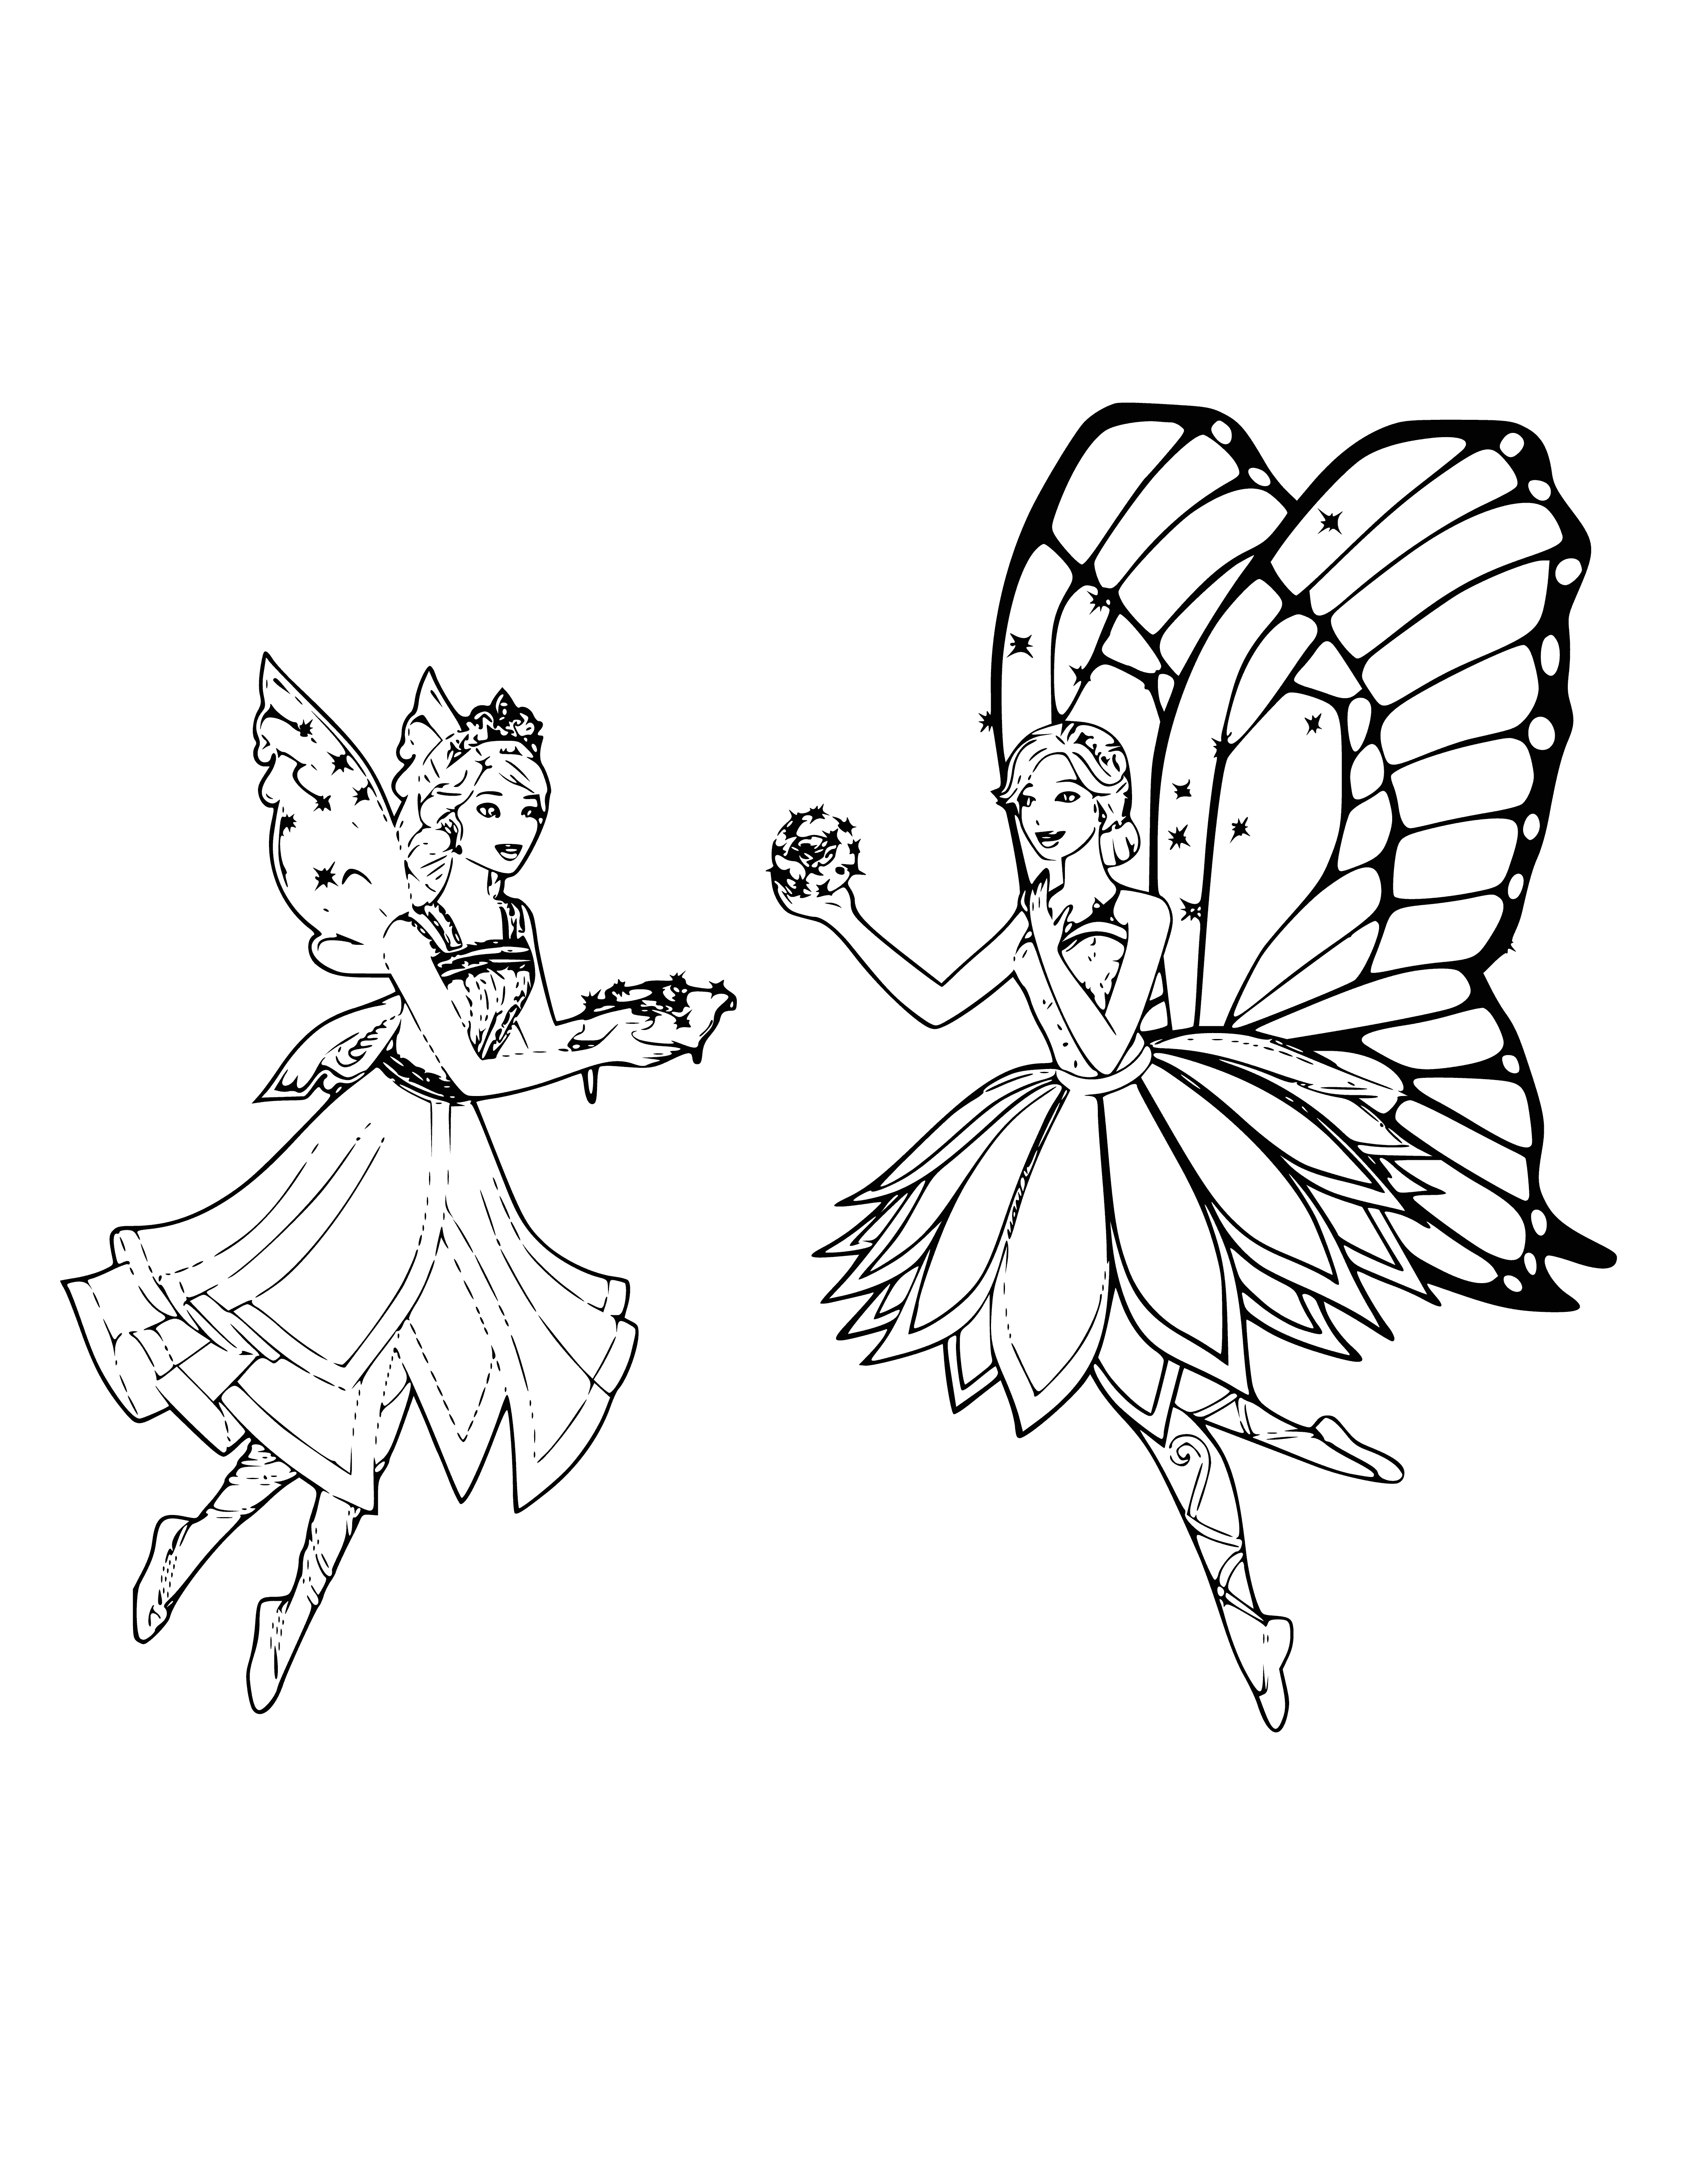 Mariposa and Catania coloring page